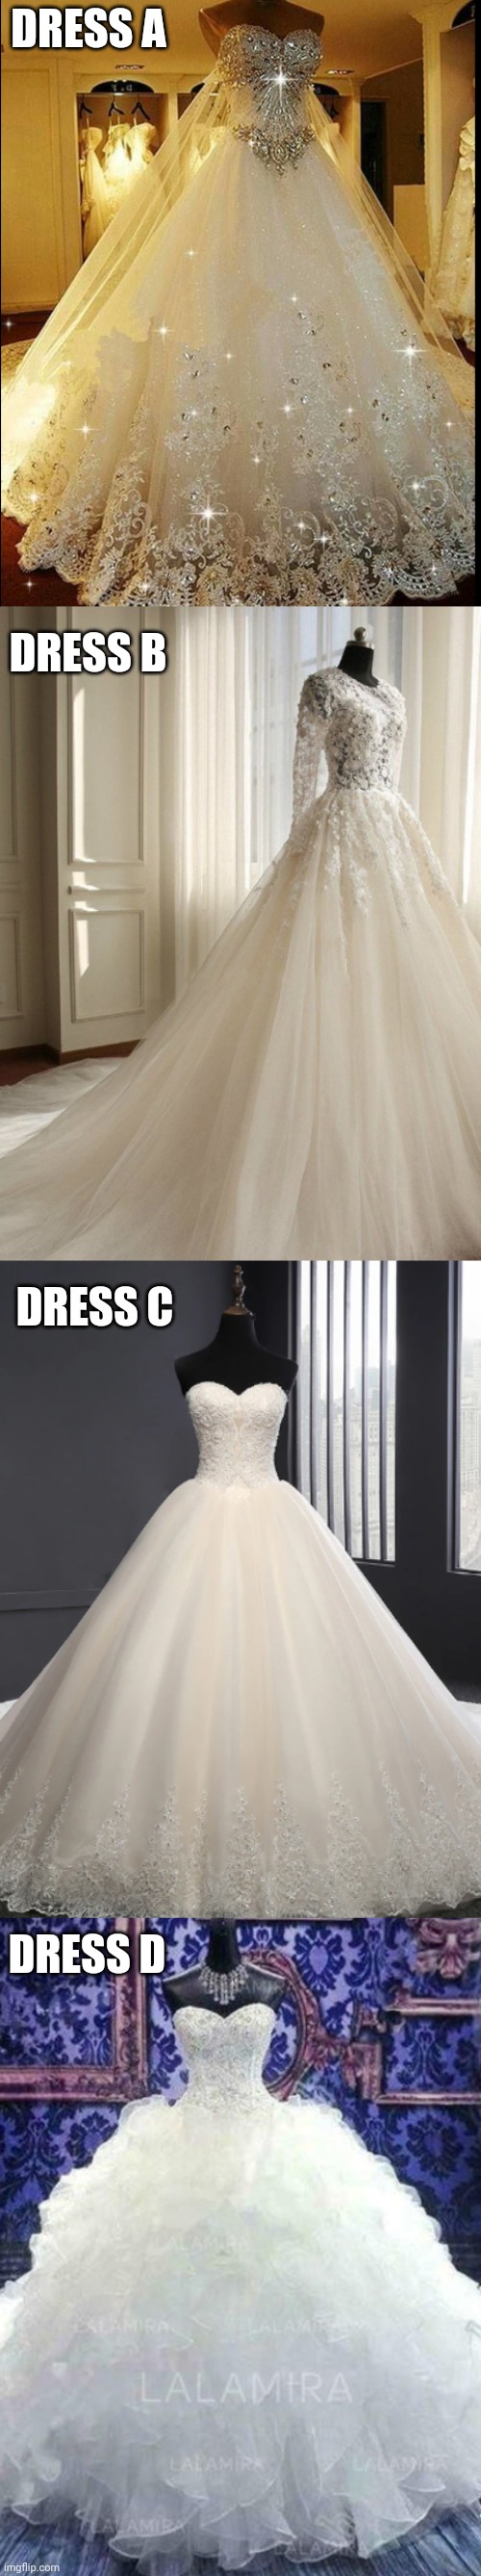 Which Wedding Dress Should I Wear? (I just got engaged) | DRESS A; DRESS B; DRESS C; DRESS D | made w/ Imgflip meme maker